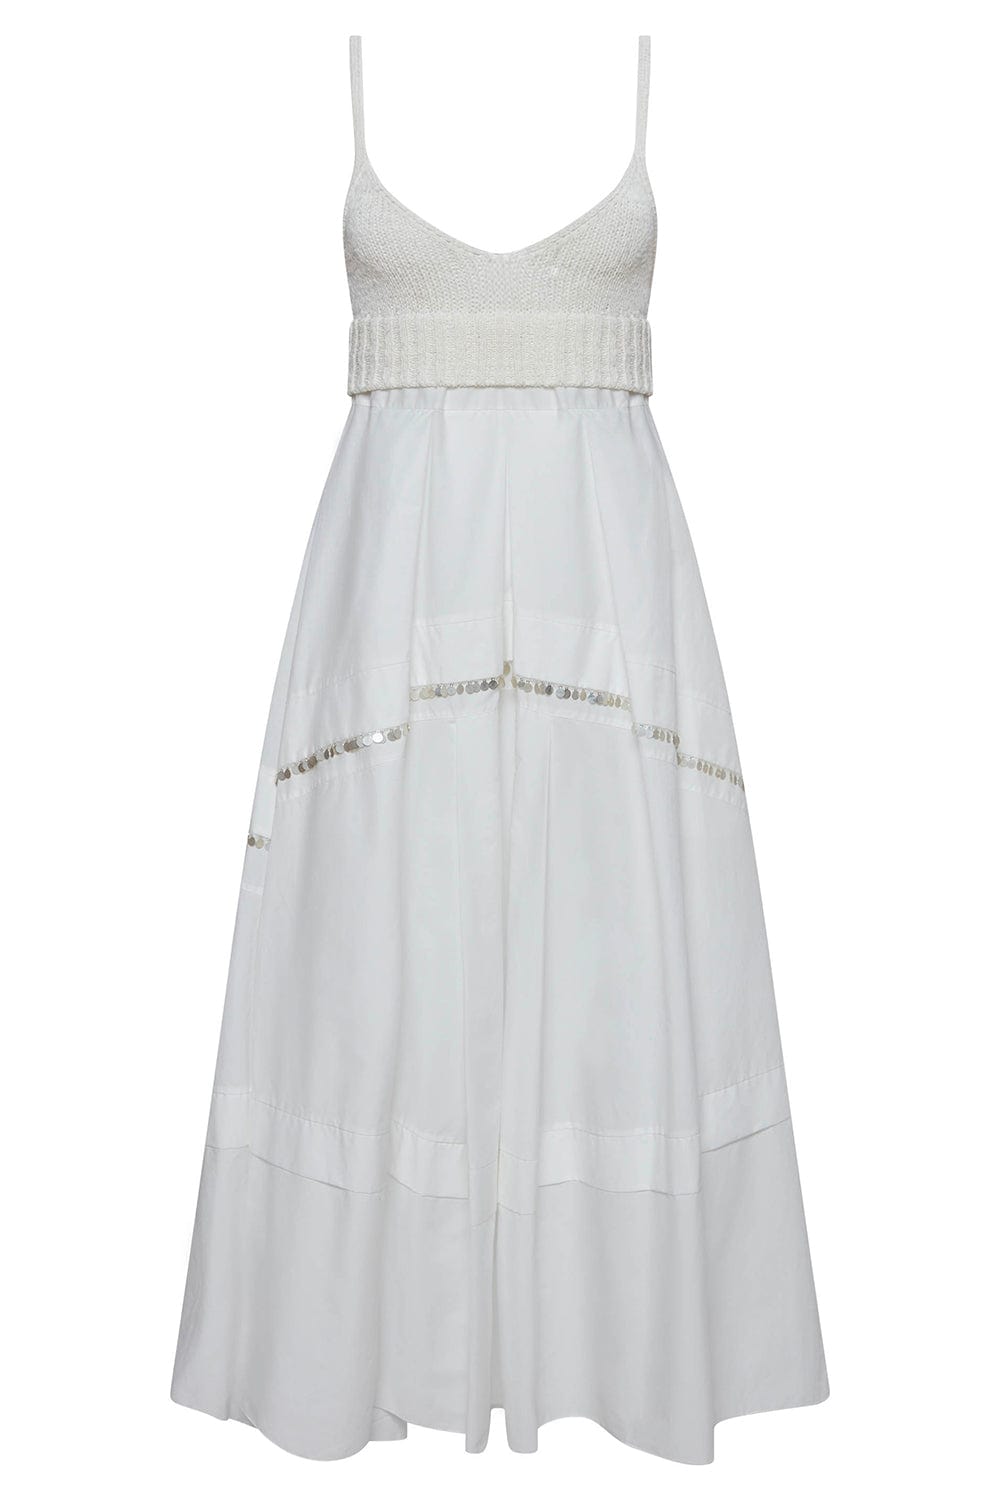 ALTUZARRA-Lysandra Dress-NATURAL WHITE